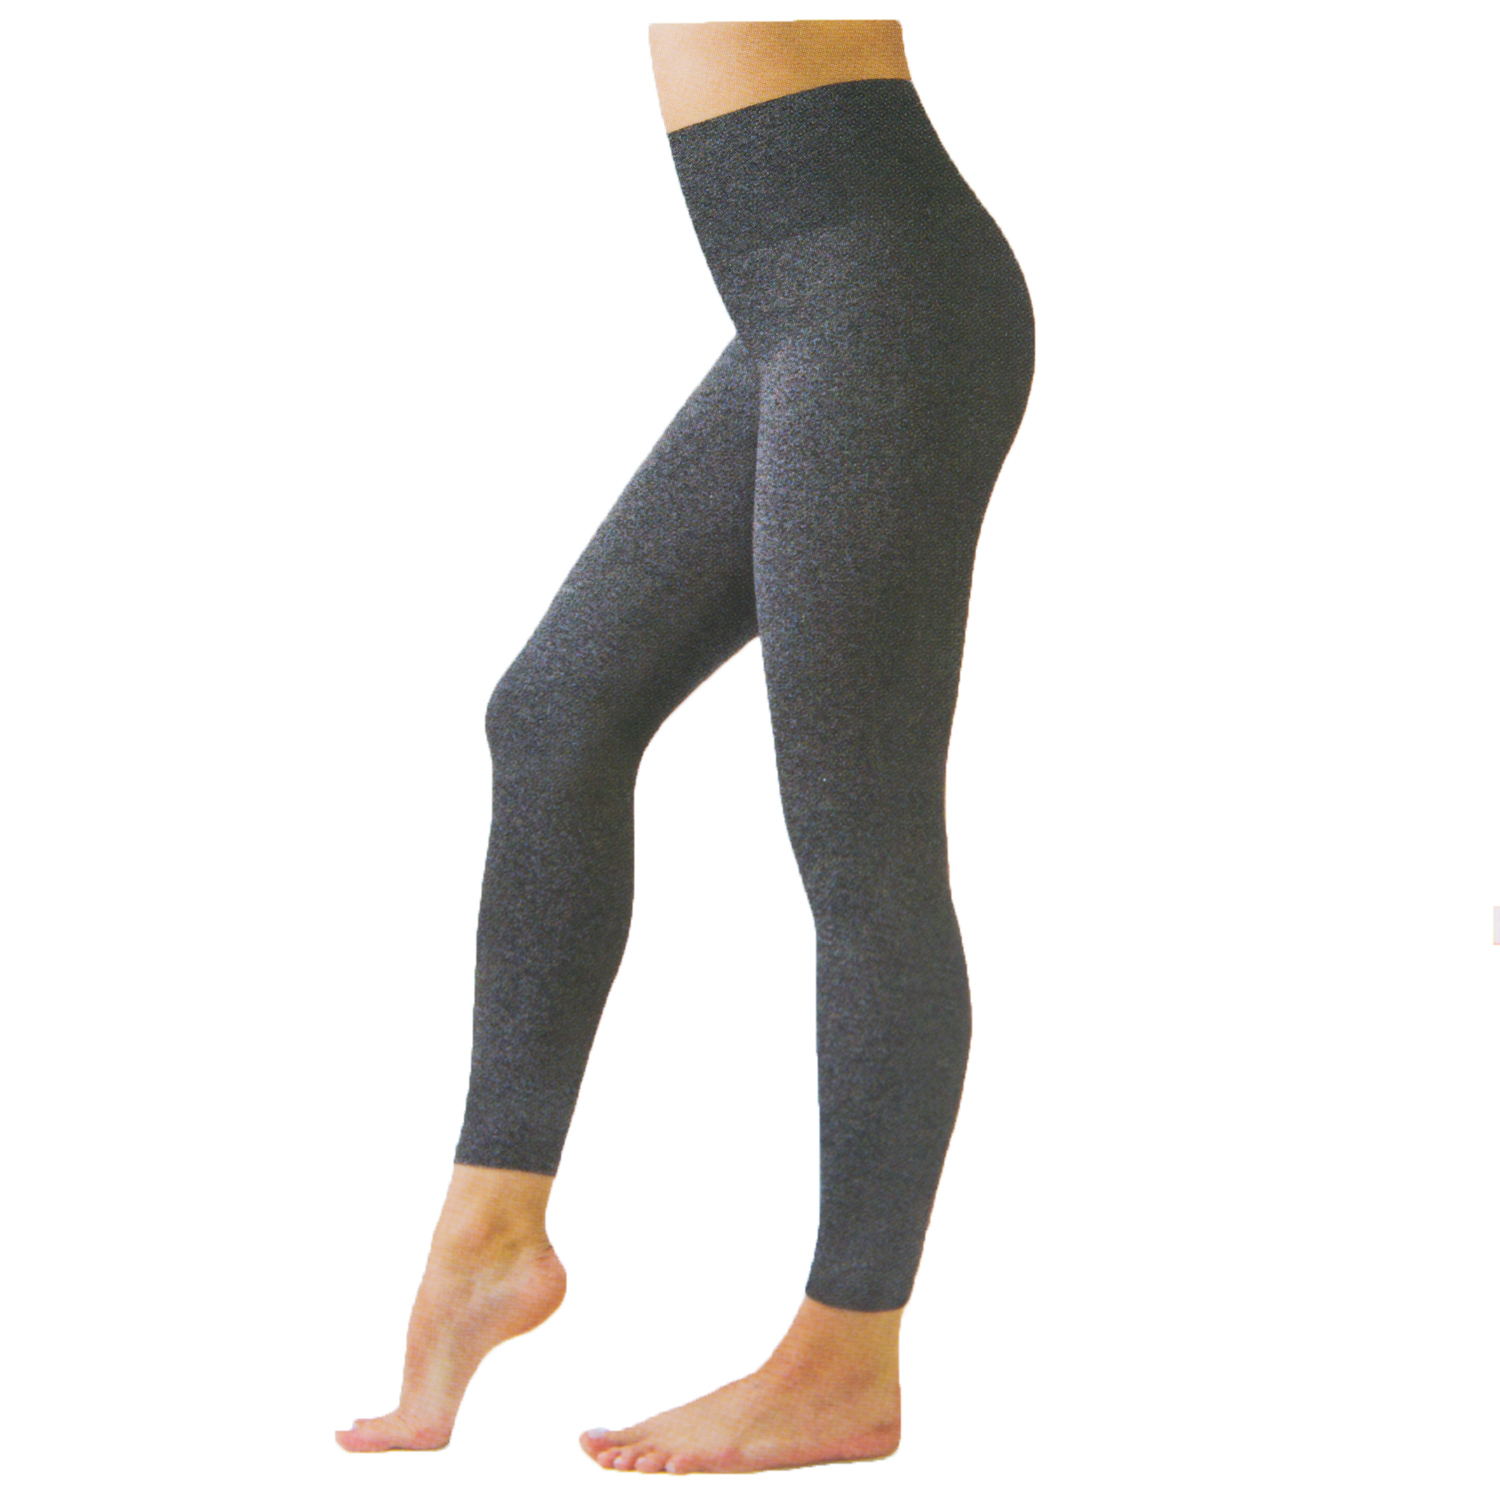 TOMMIE COPPER Women's Lower Back Support Legging, Slate Grey, Large 